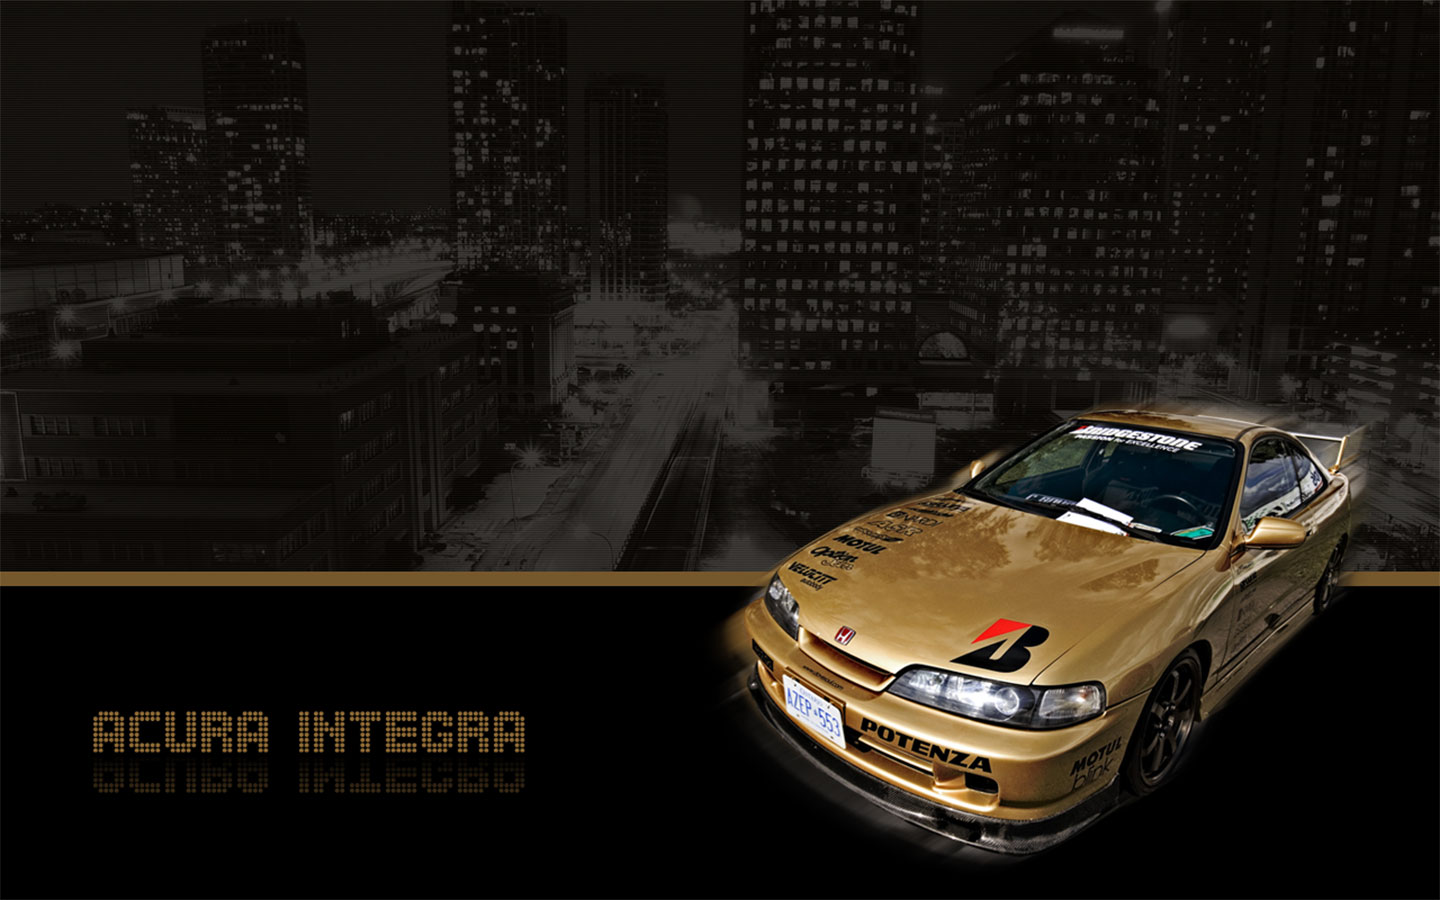 Honda Integra Picture